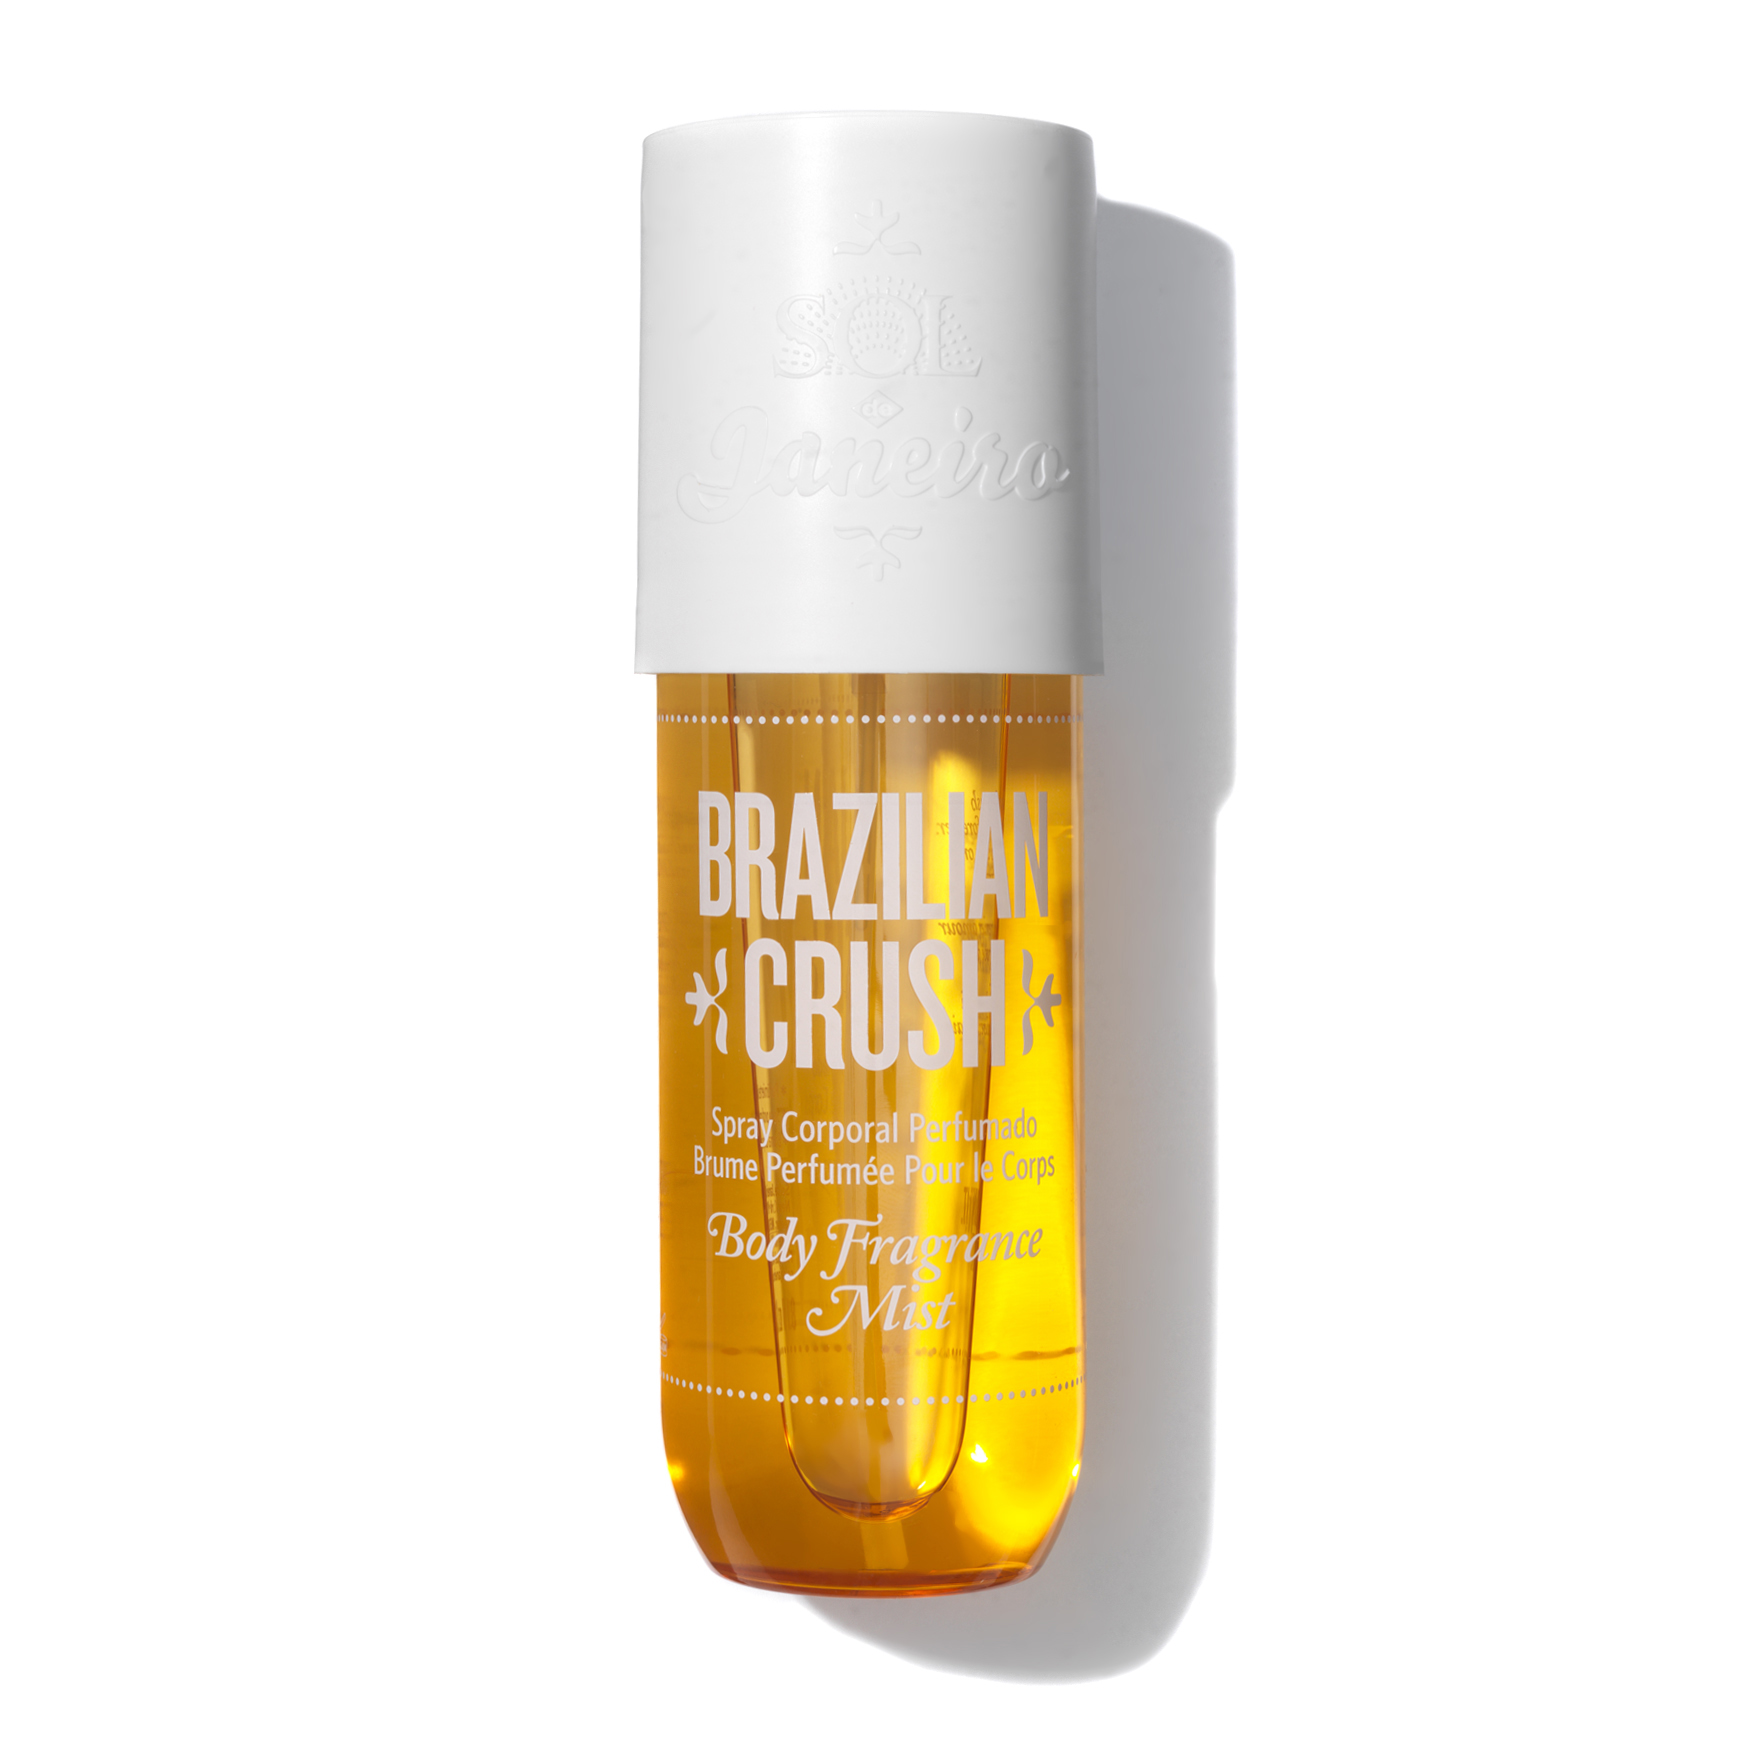 Sol de janeiro Brazilian Crush Cheirosa 39 Perfume Mist 30mls, Beauty &  Personal Care, Fragrance & Deodorants on Carousell